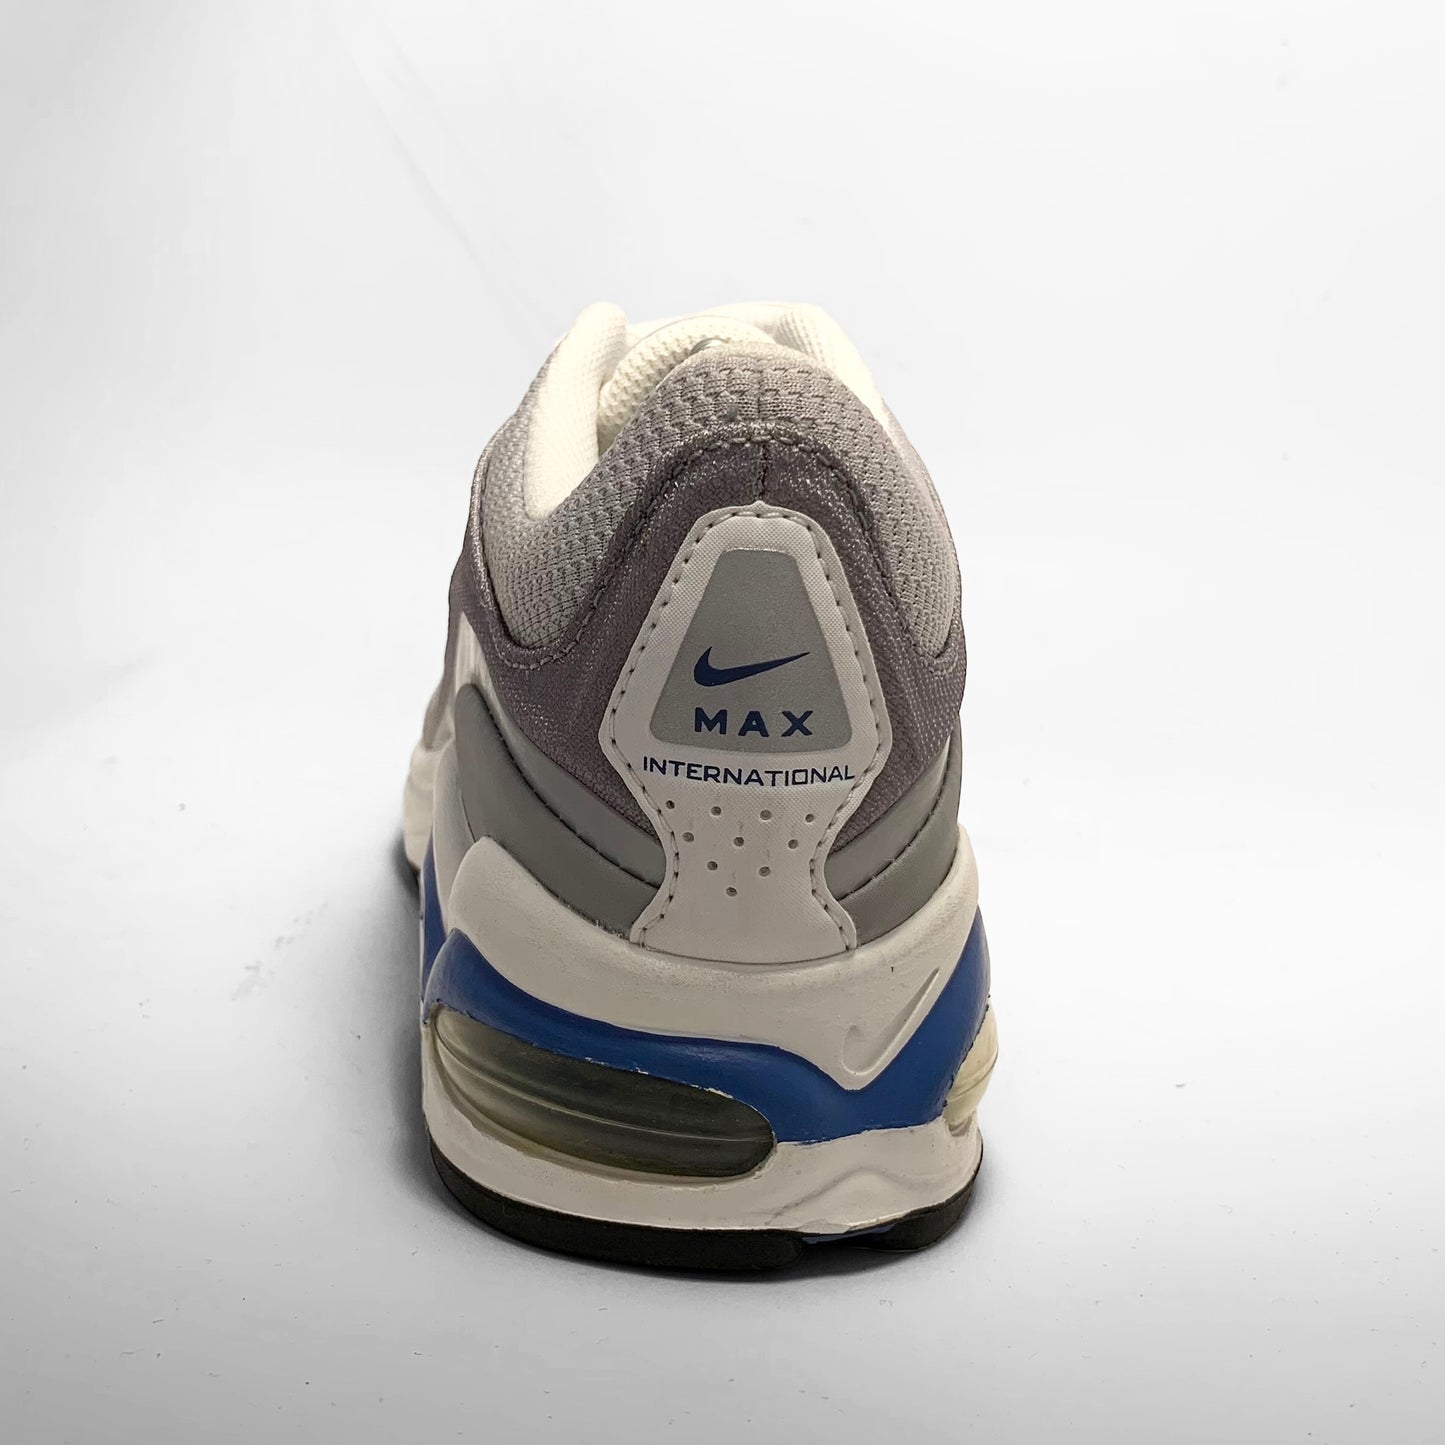 Nike Air Max International (2003)